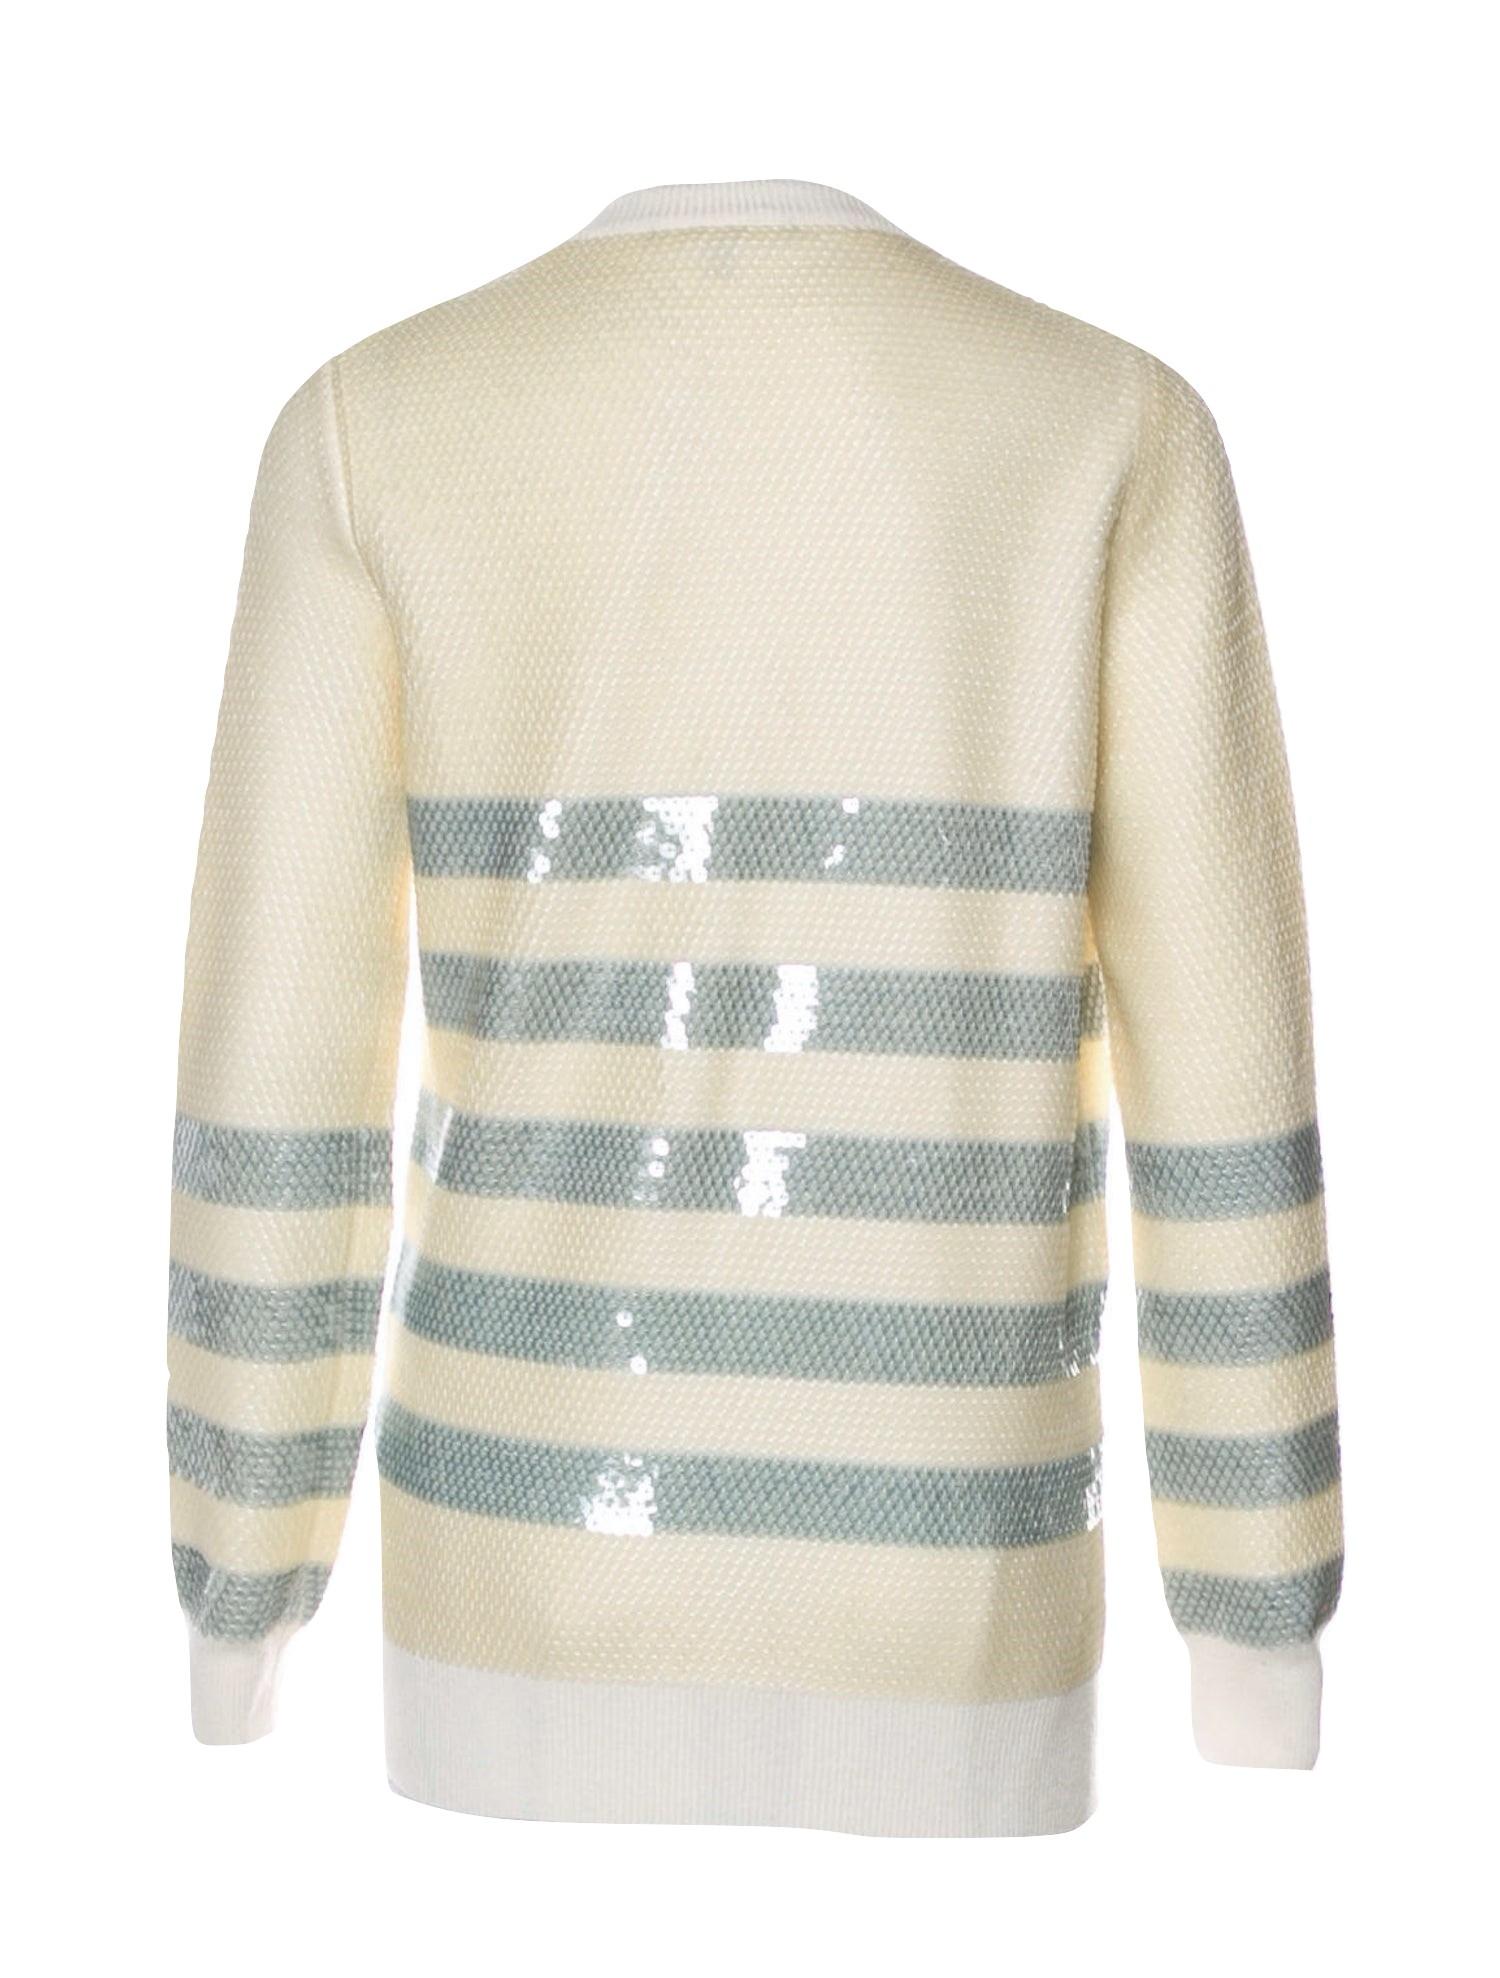 New Gucci Cashmere Cruise Resort 2015 Ad Sequin Sweater  Sz M 1